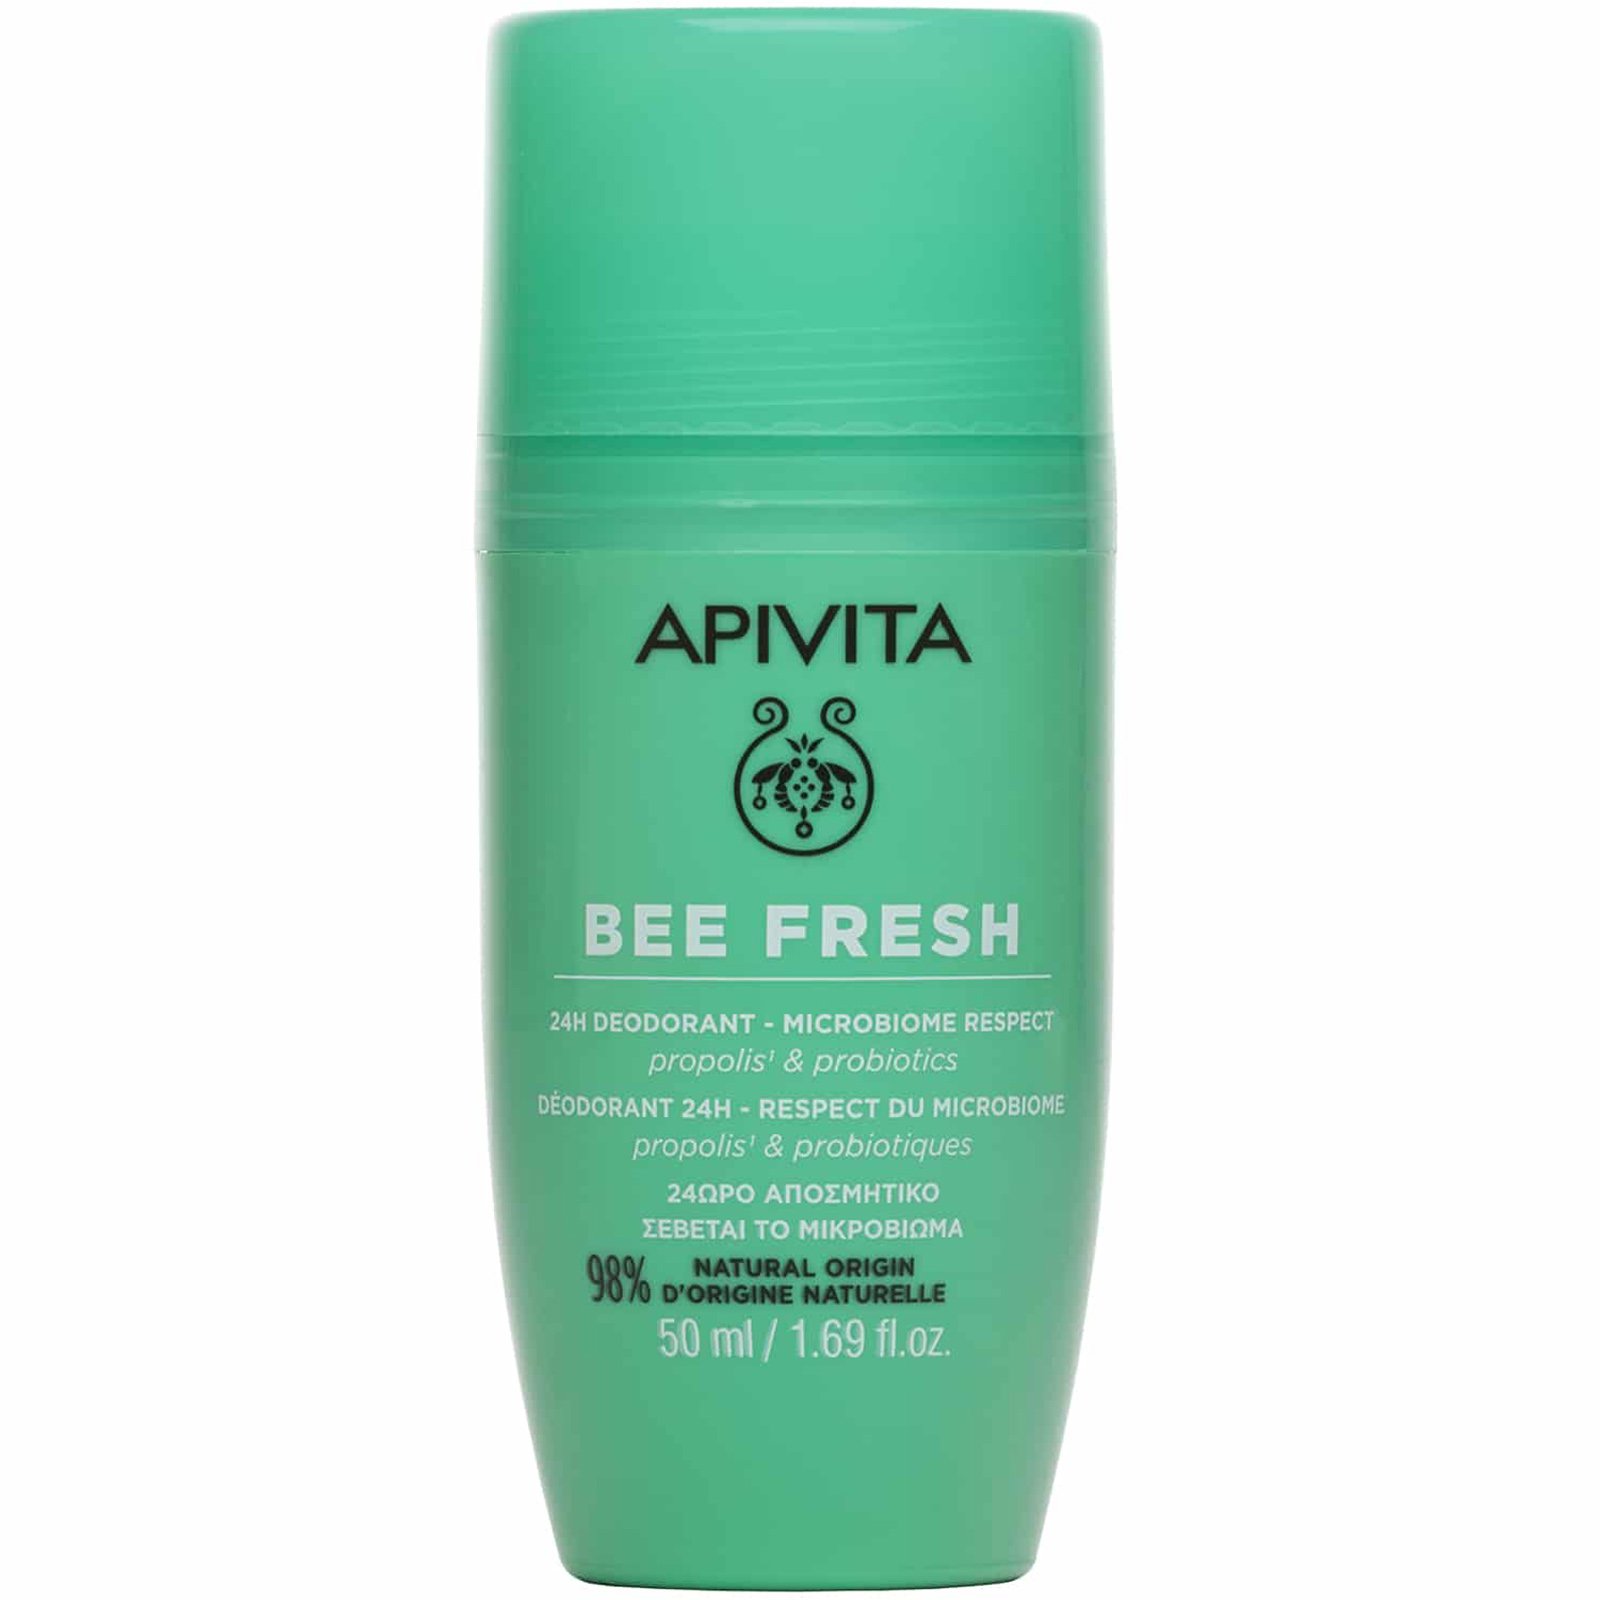 Apivita Bee Fresh 24h Deodorant 50ml,Aποσμητικό 24ωρης Δράσης με Σεβασμό στο Μικροβίωμα του Δέρματος